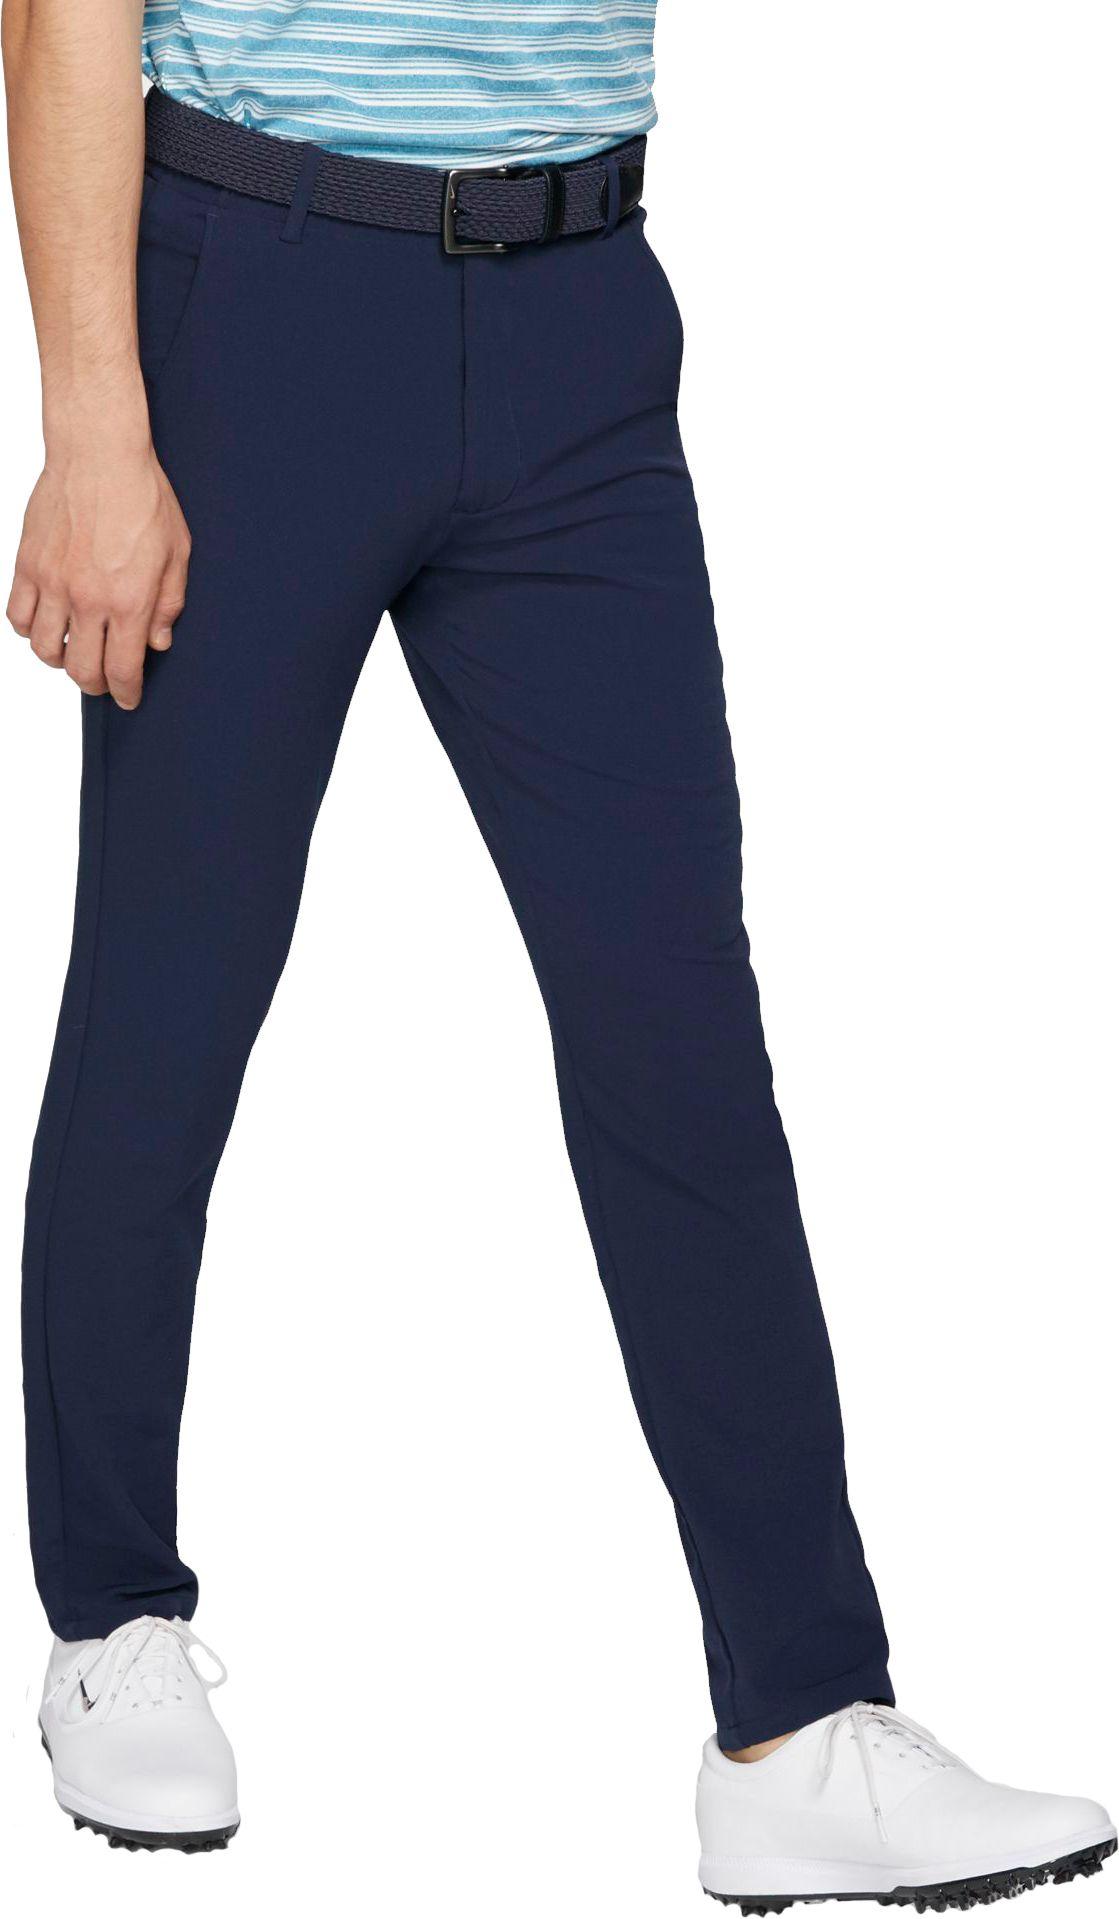 Nike Synthetic Flex Vapor Slim Fit Golf Pants in Blue for Men - Lyst